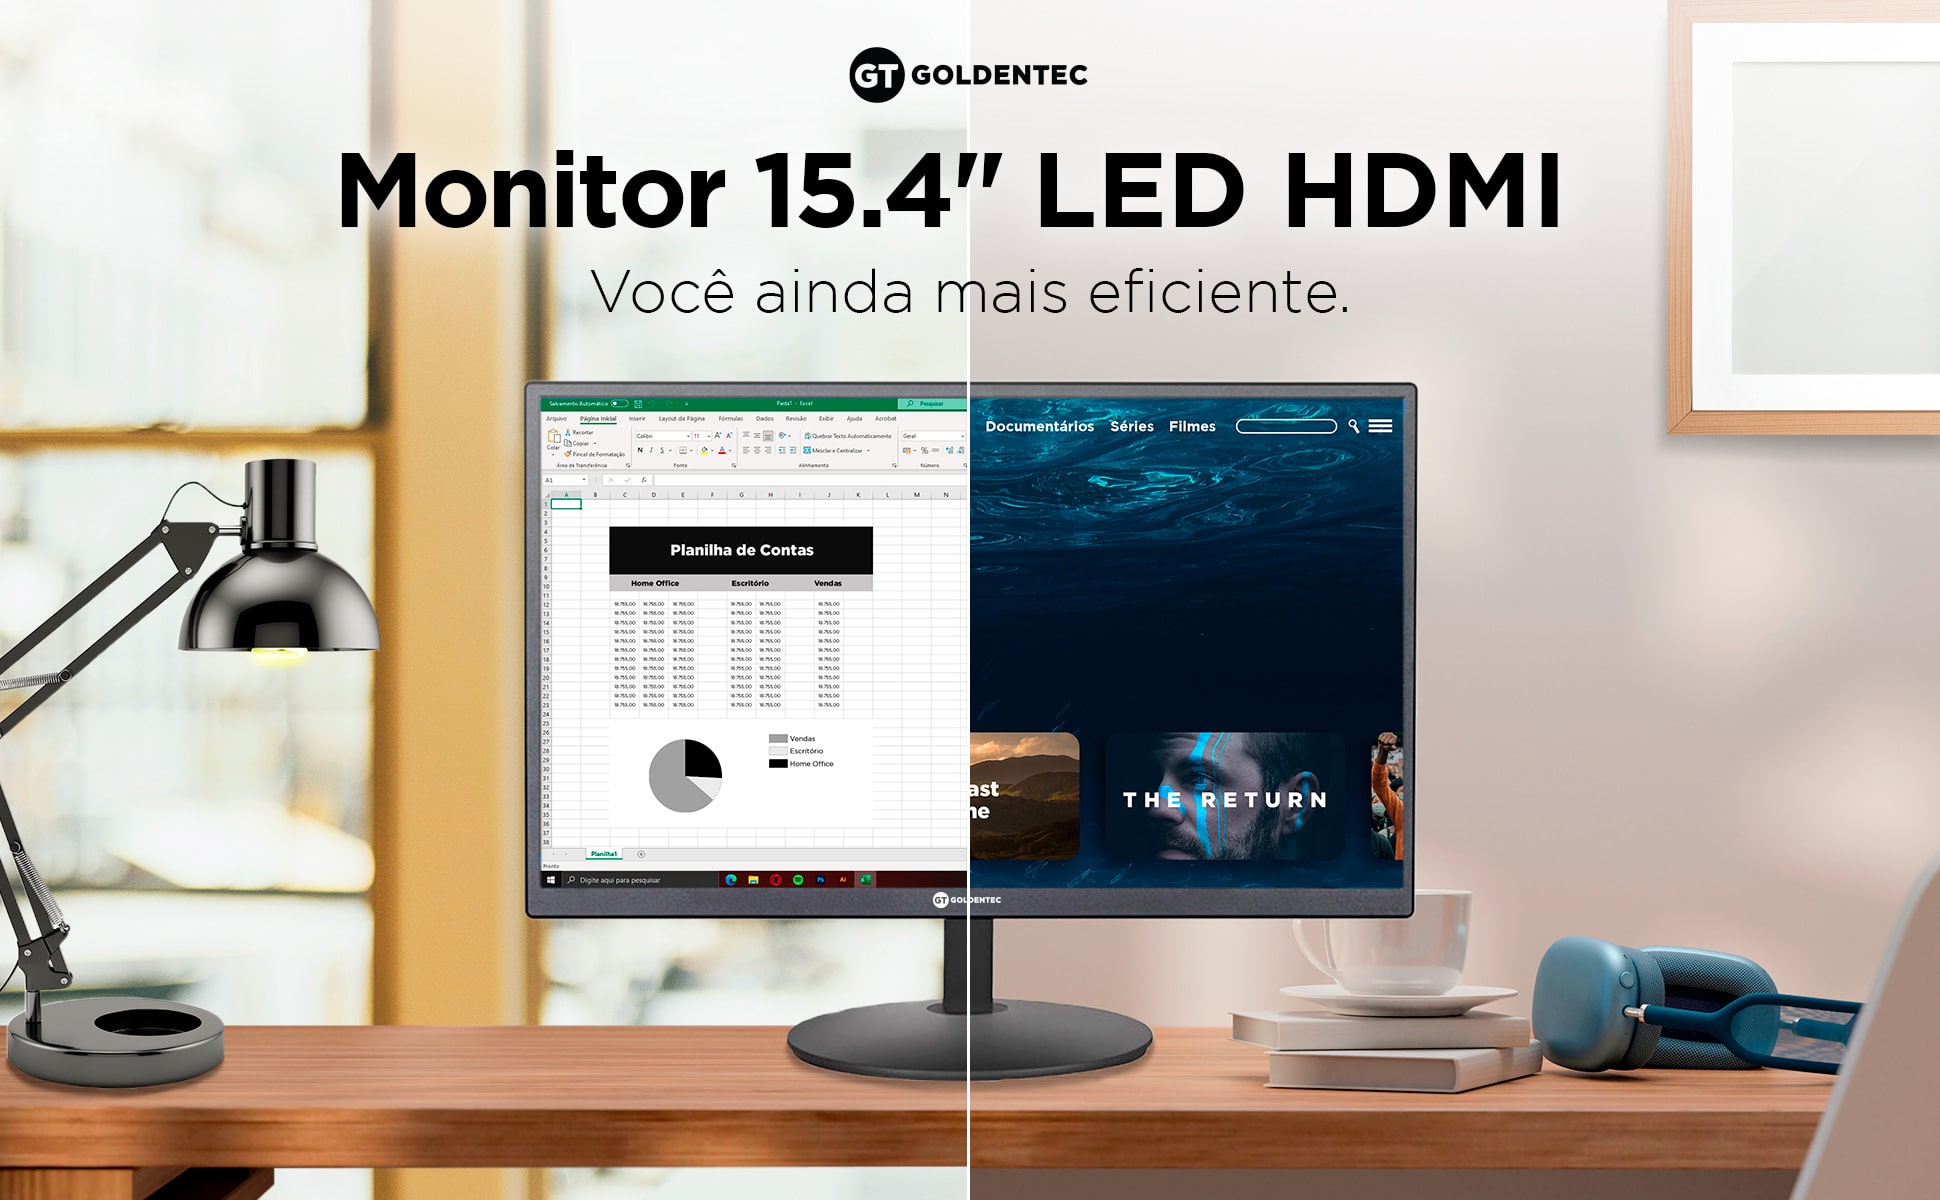 Monitor 15.4 LED HDMI Goldentec